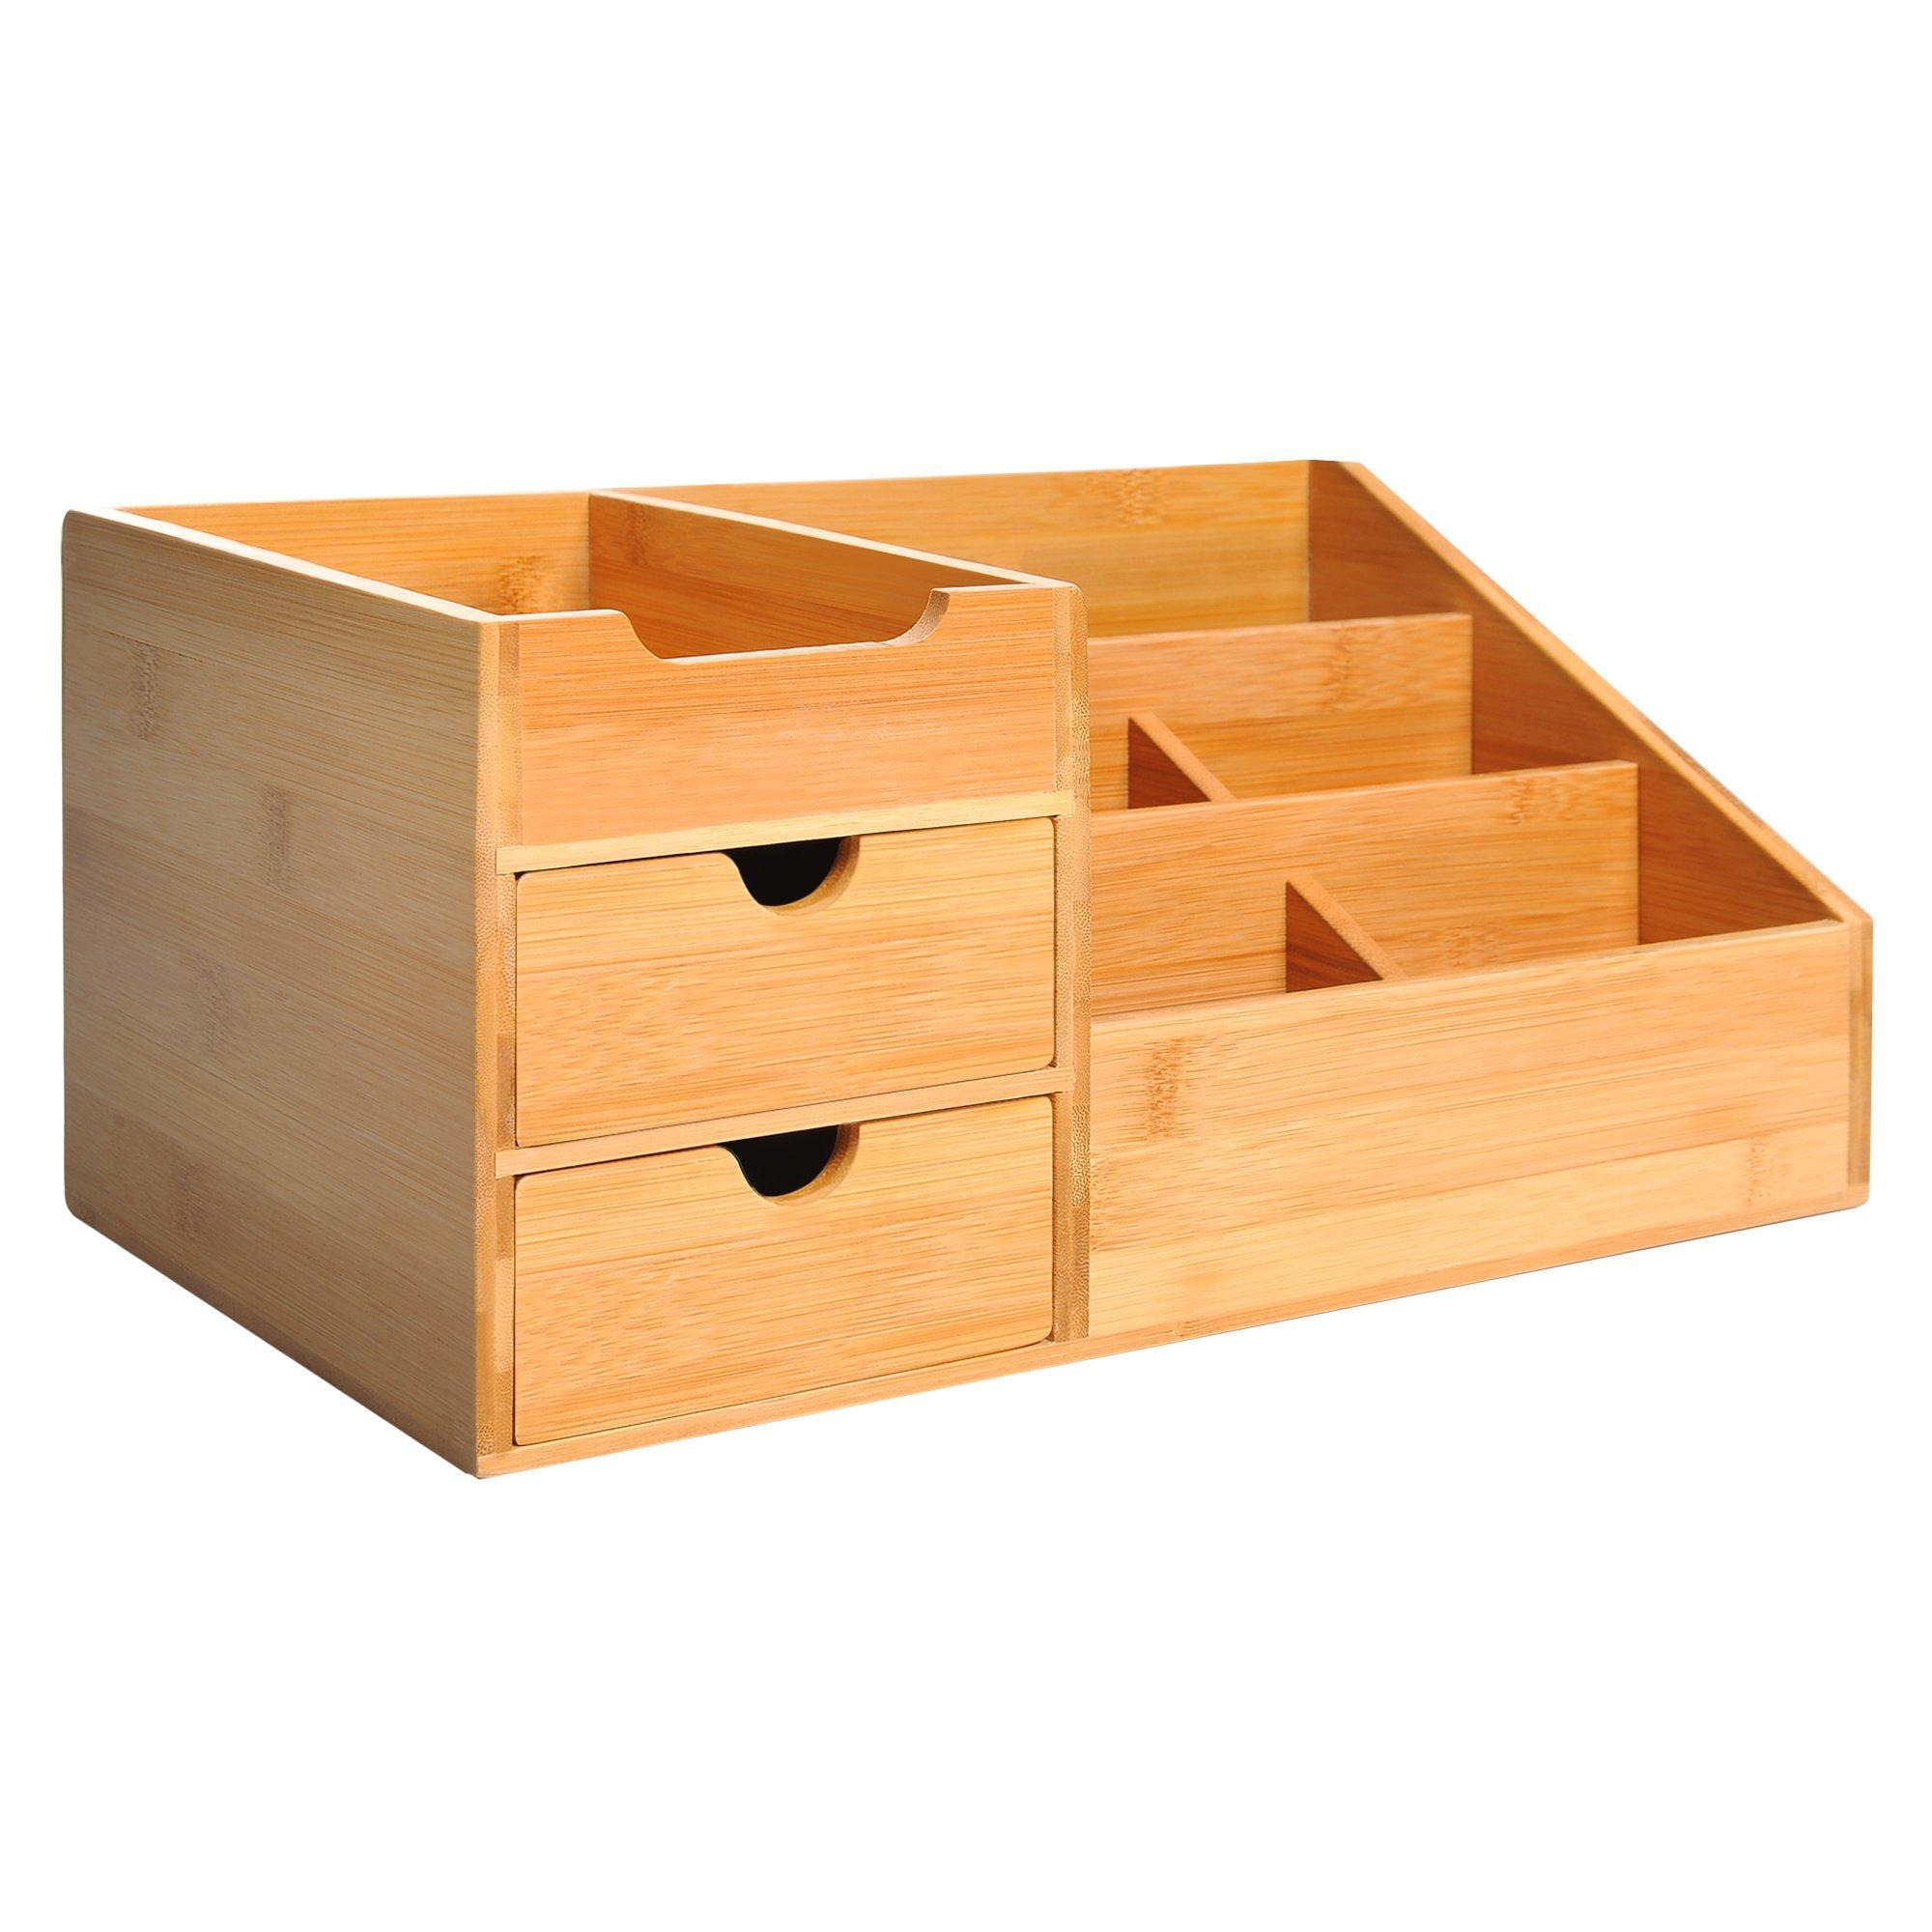 Organiser Holder Multi Function Storage Caddy Drawers Office - image 1